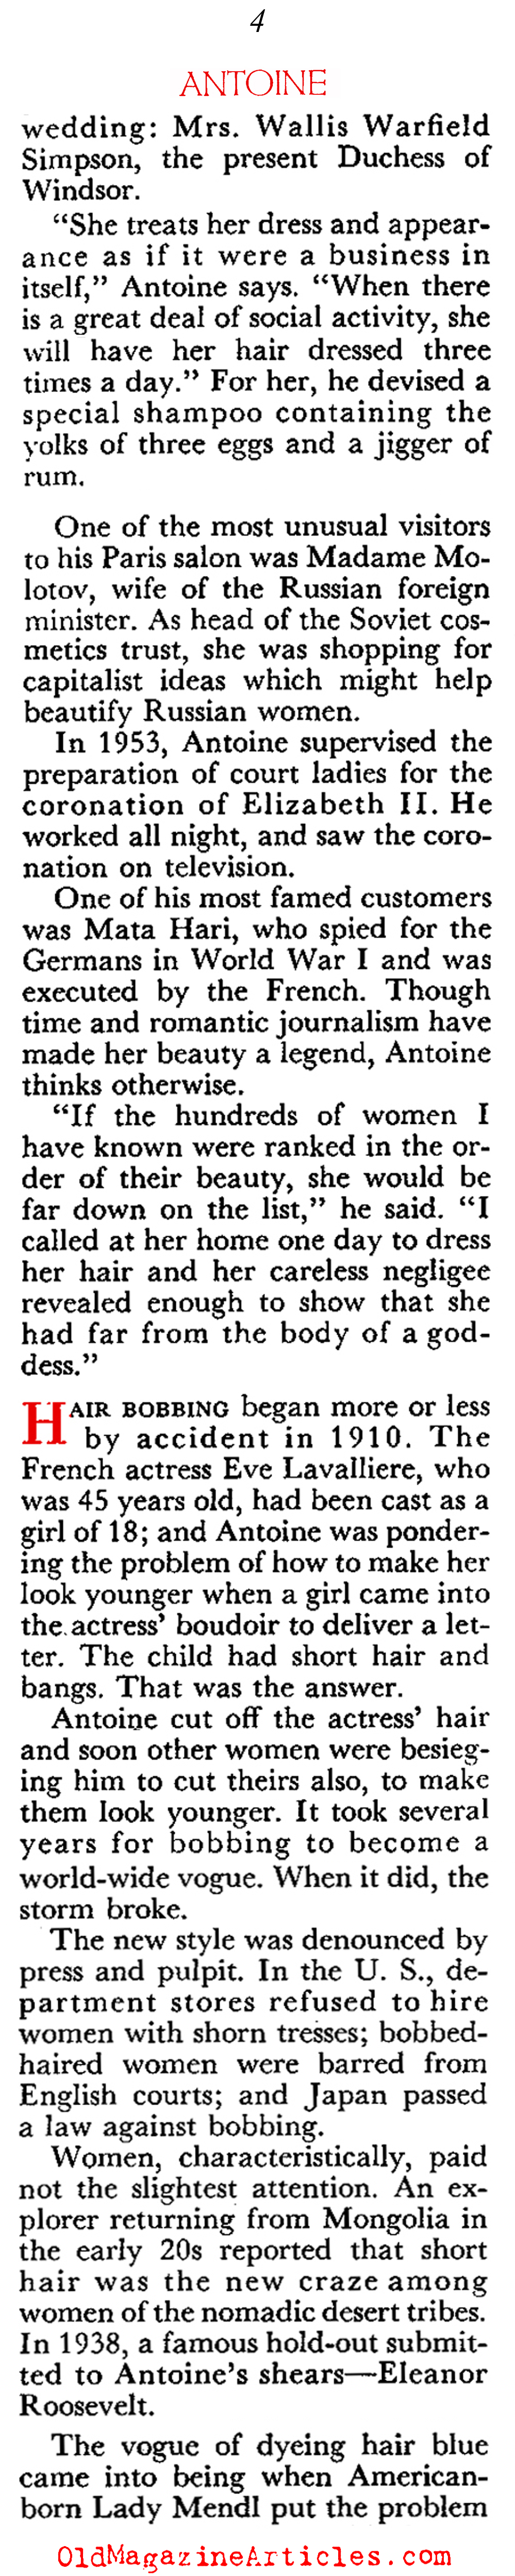 The First Celebrity Hairdresser (Coronet Magazine, 1955)